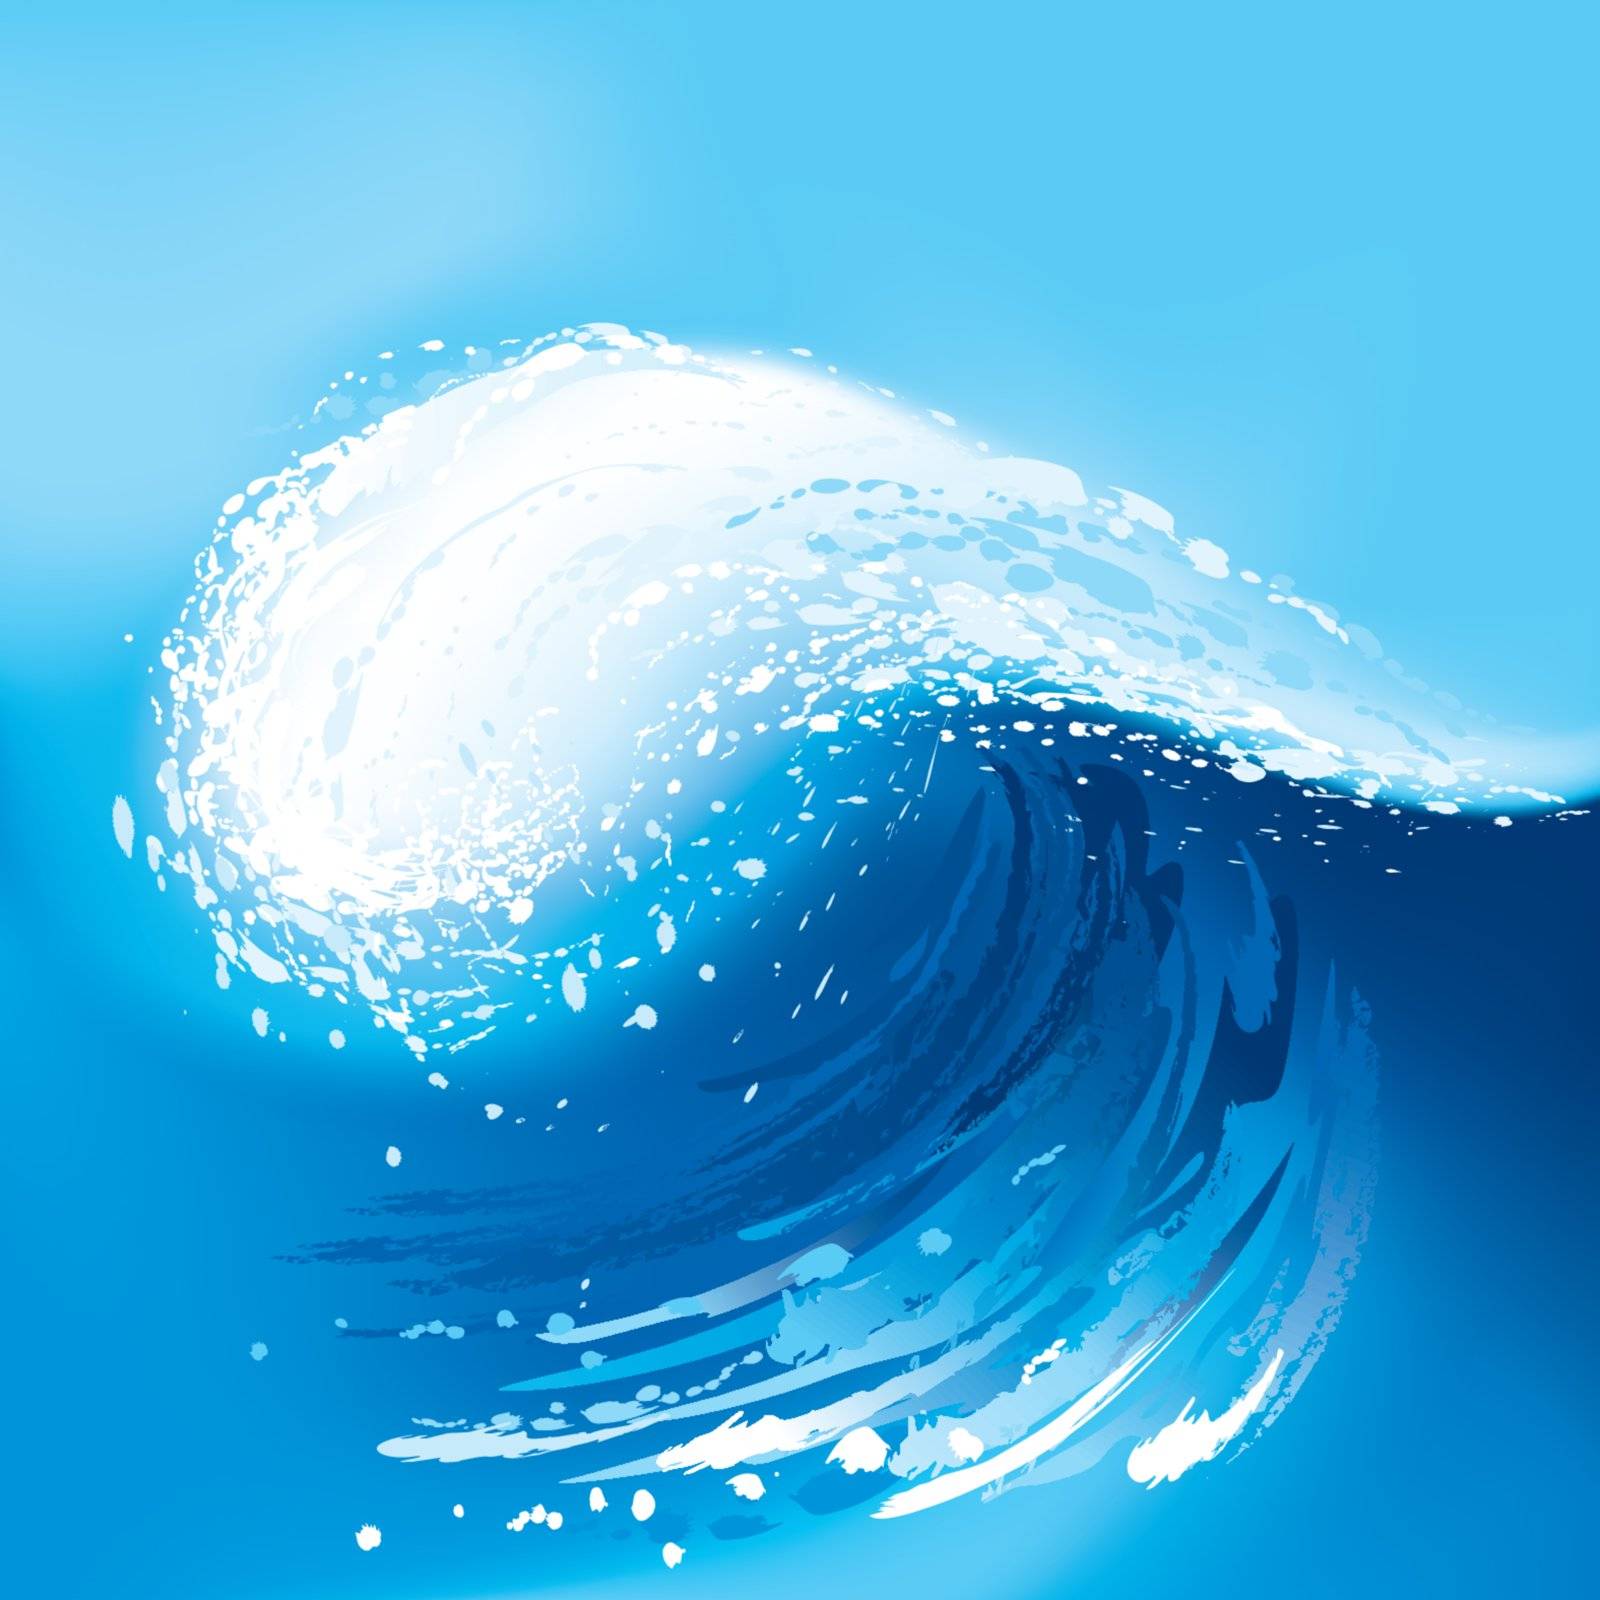 Big Wave by Juland